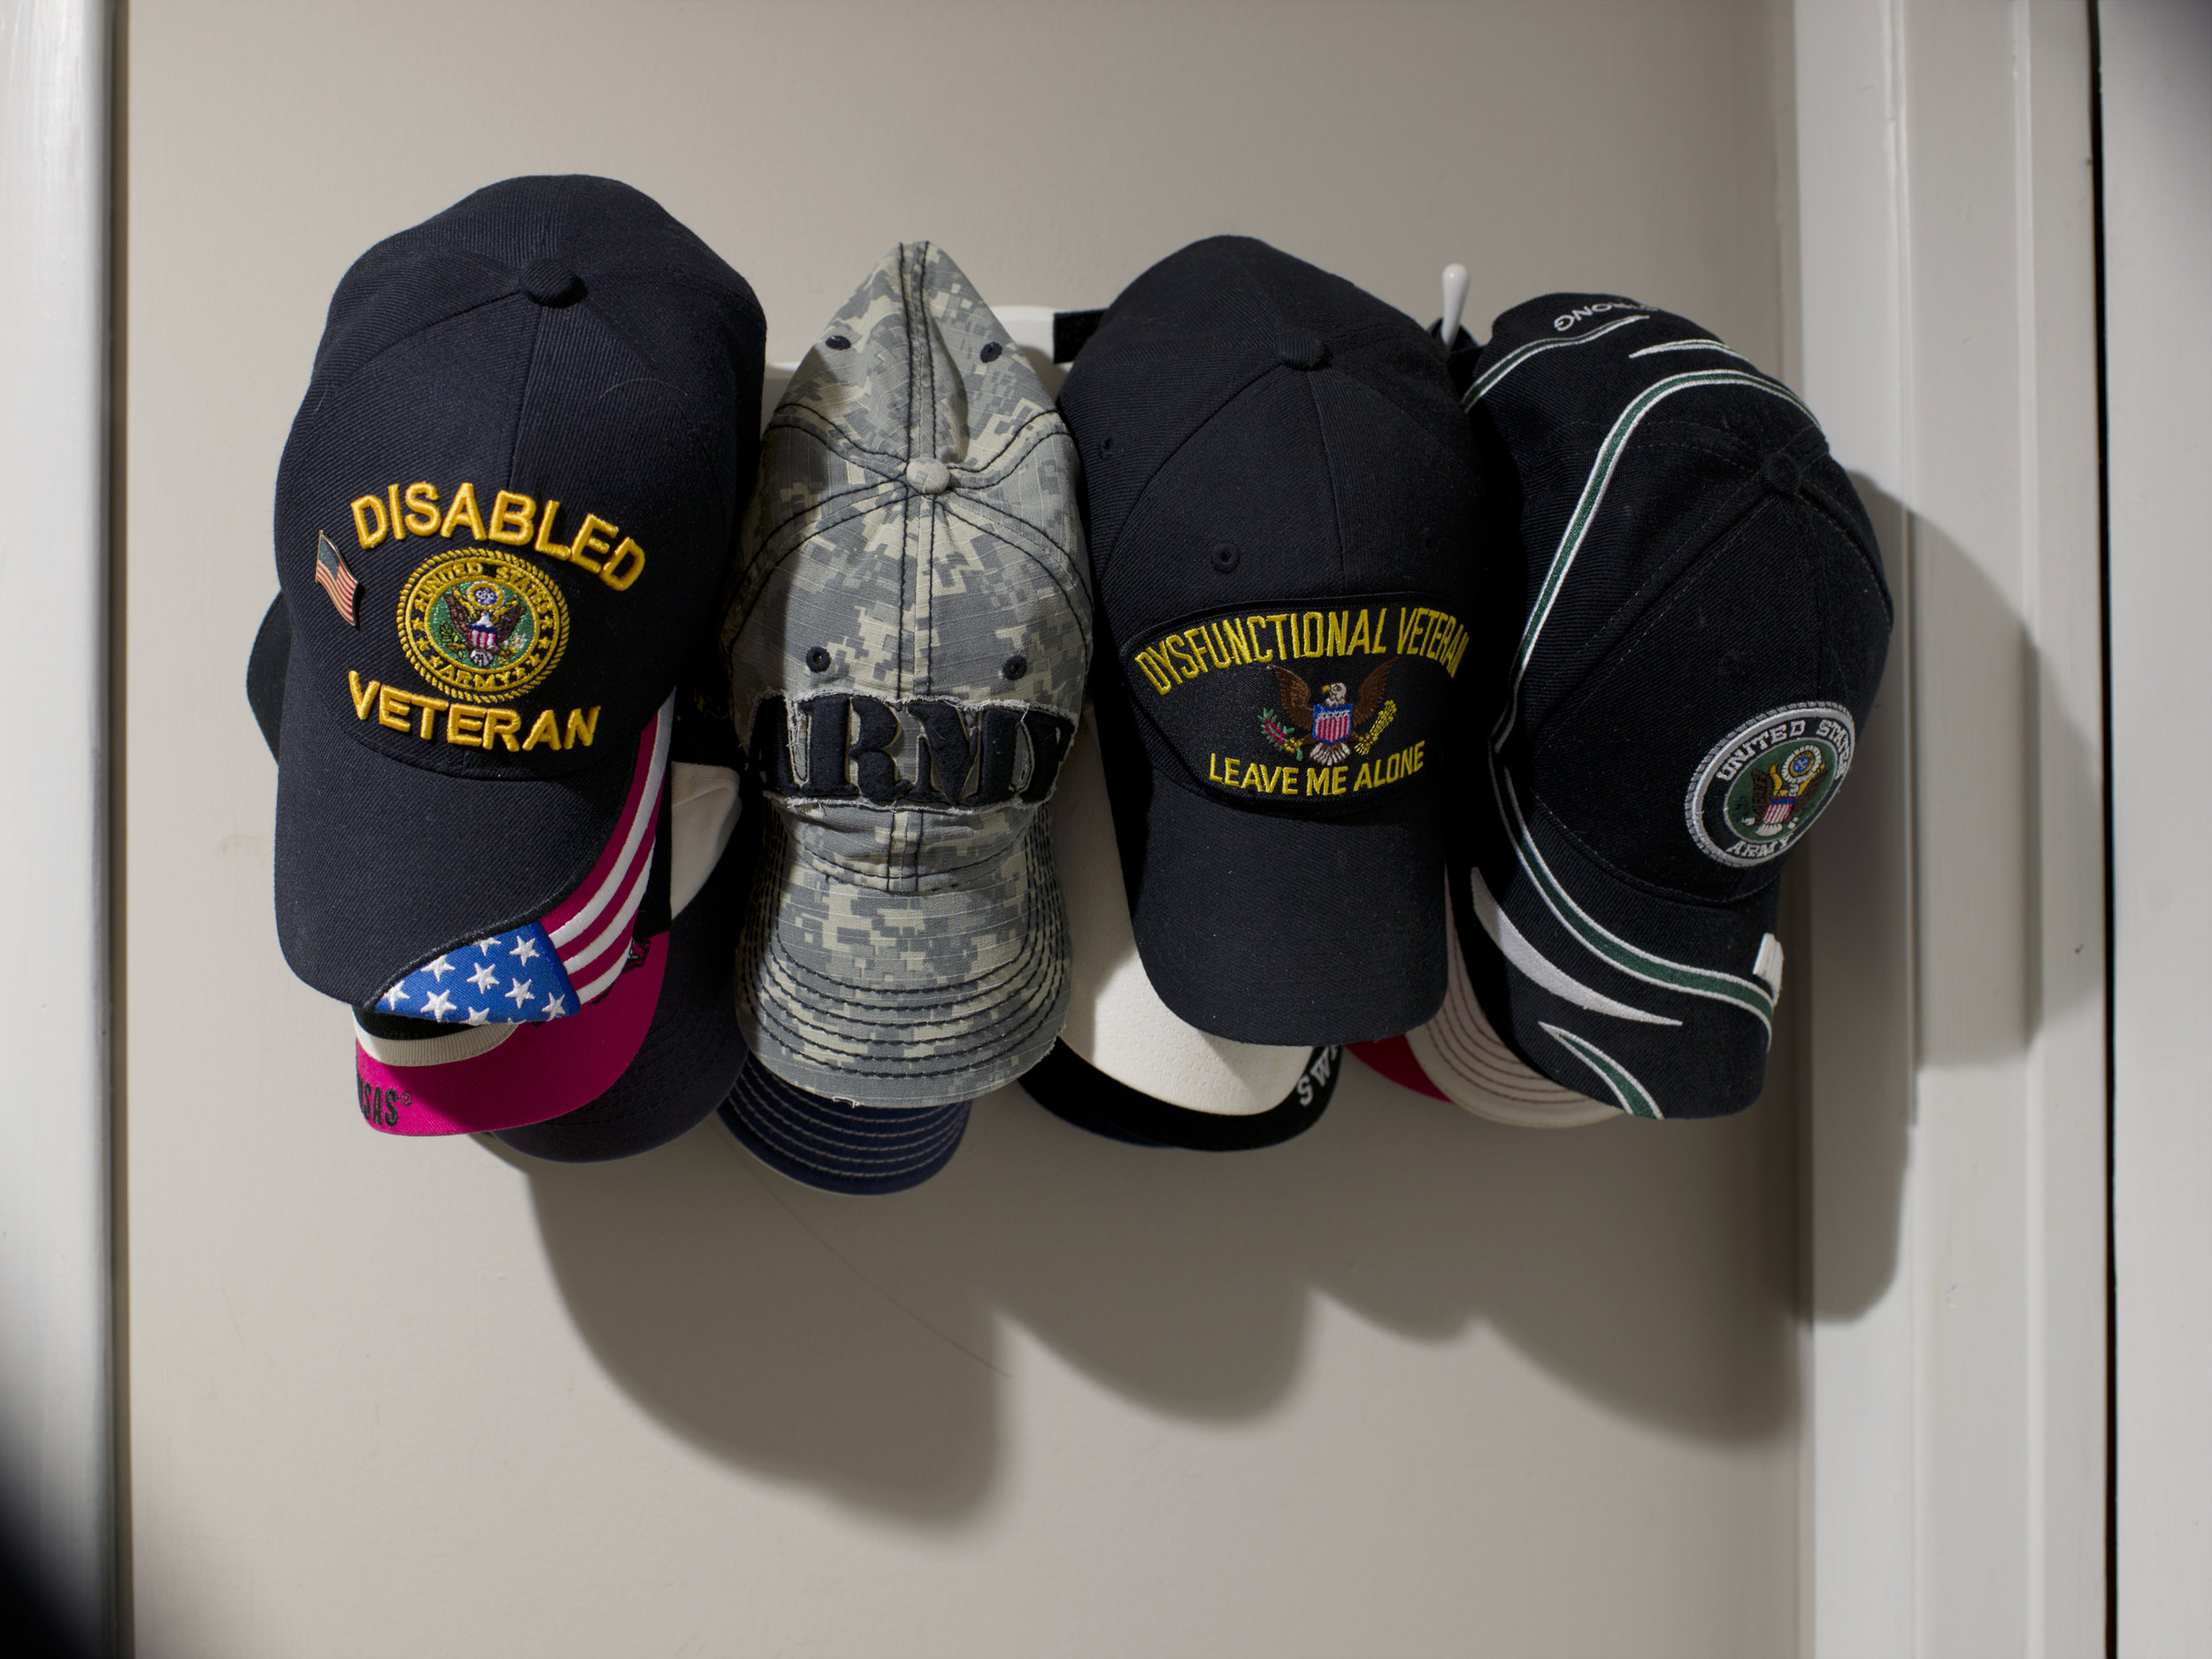  Hank's hats, North Little Rock, AR, 2015 